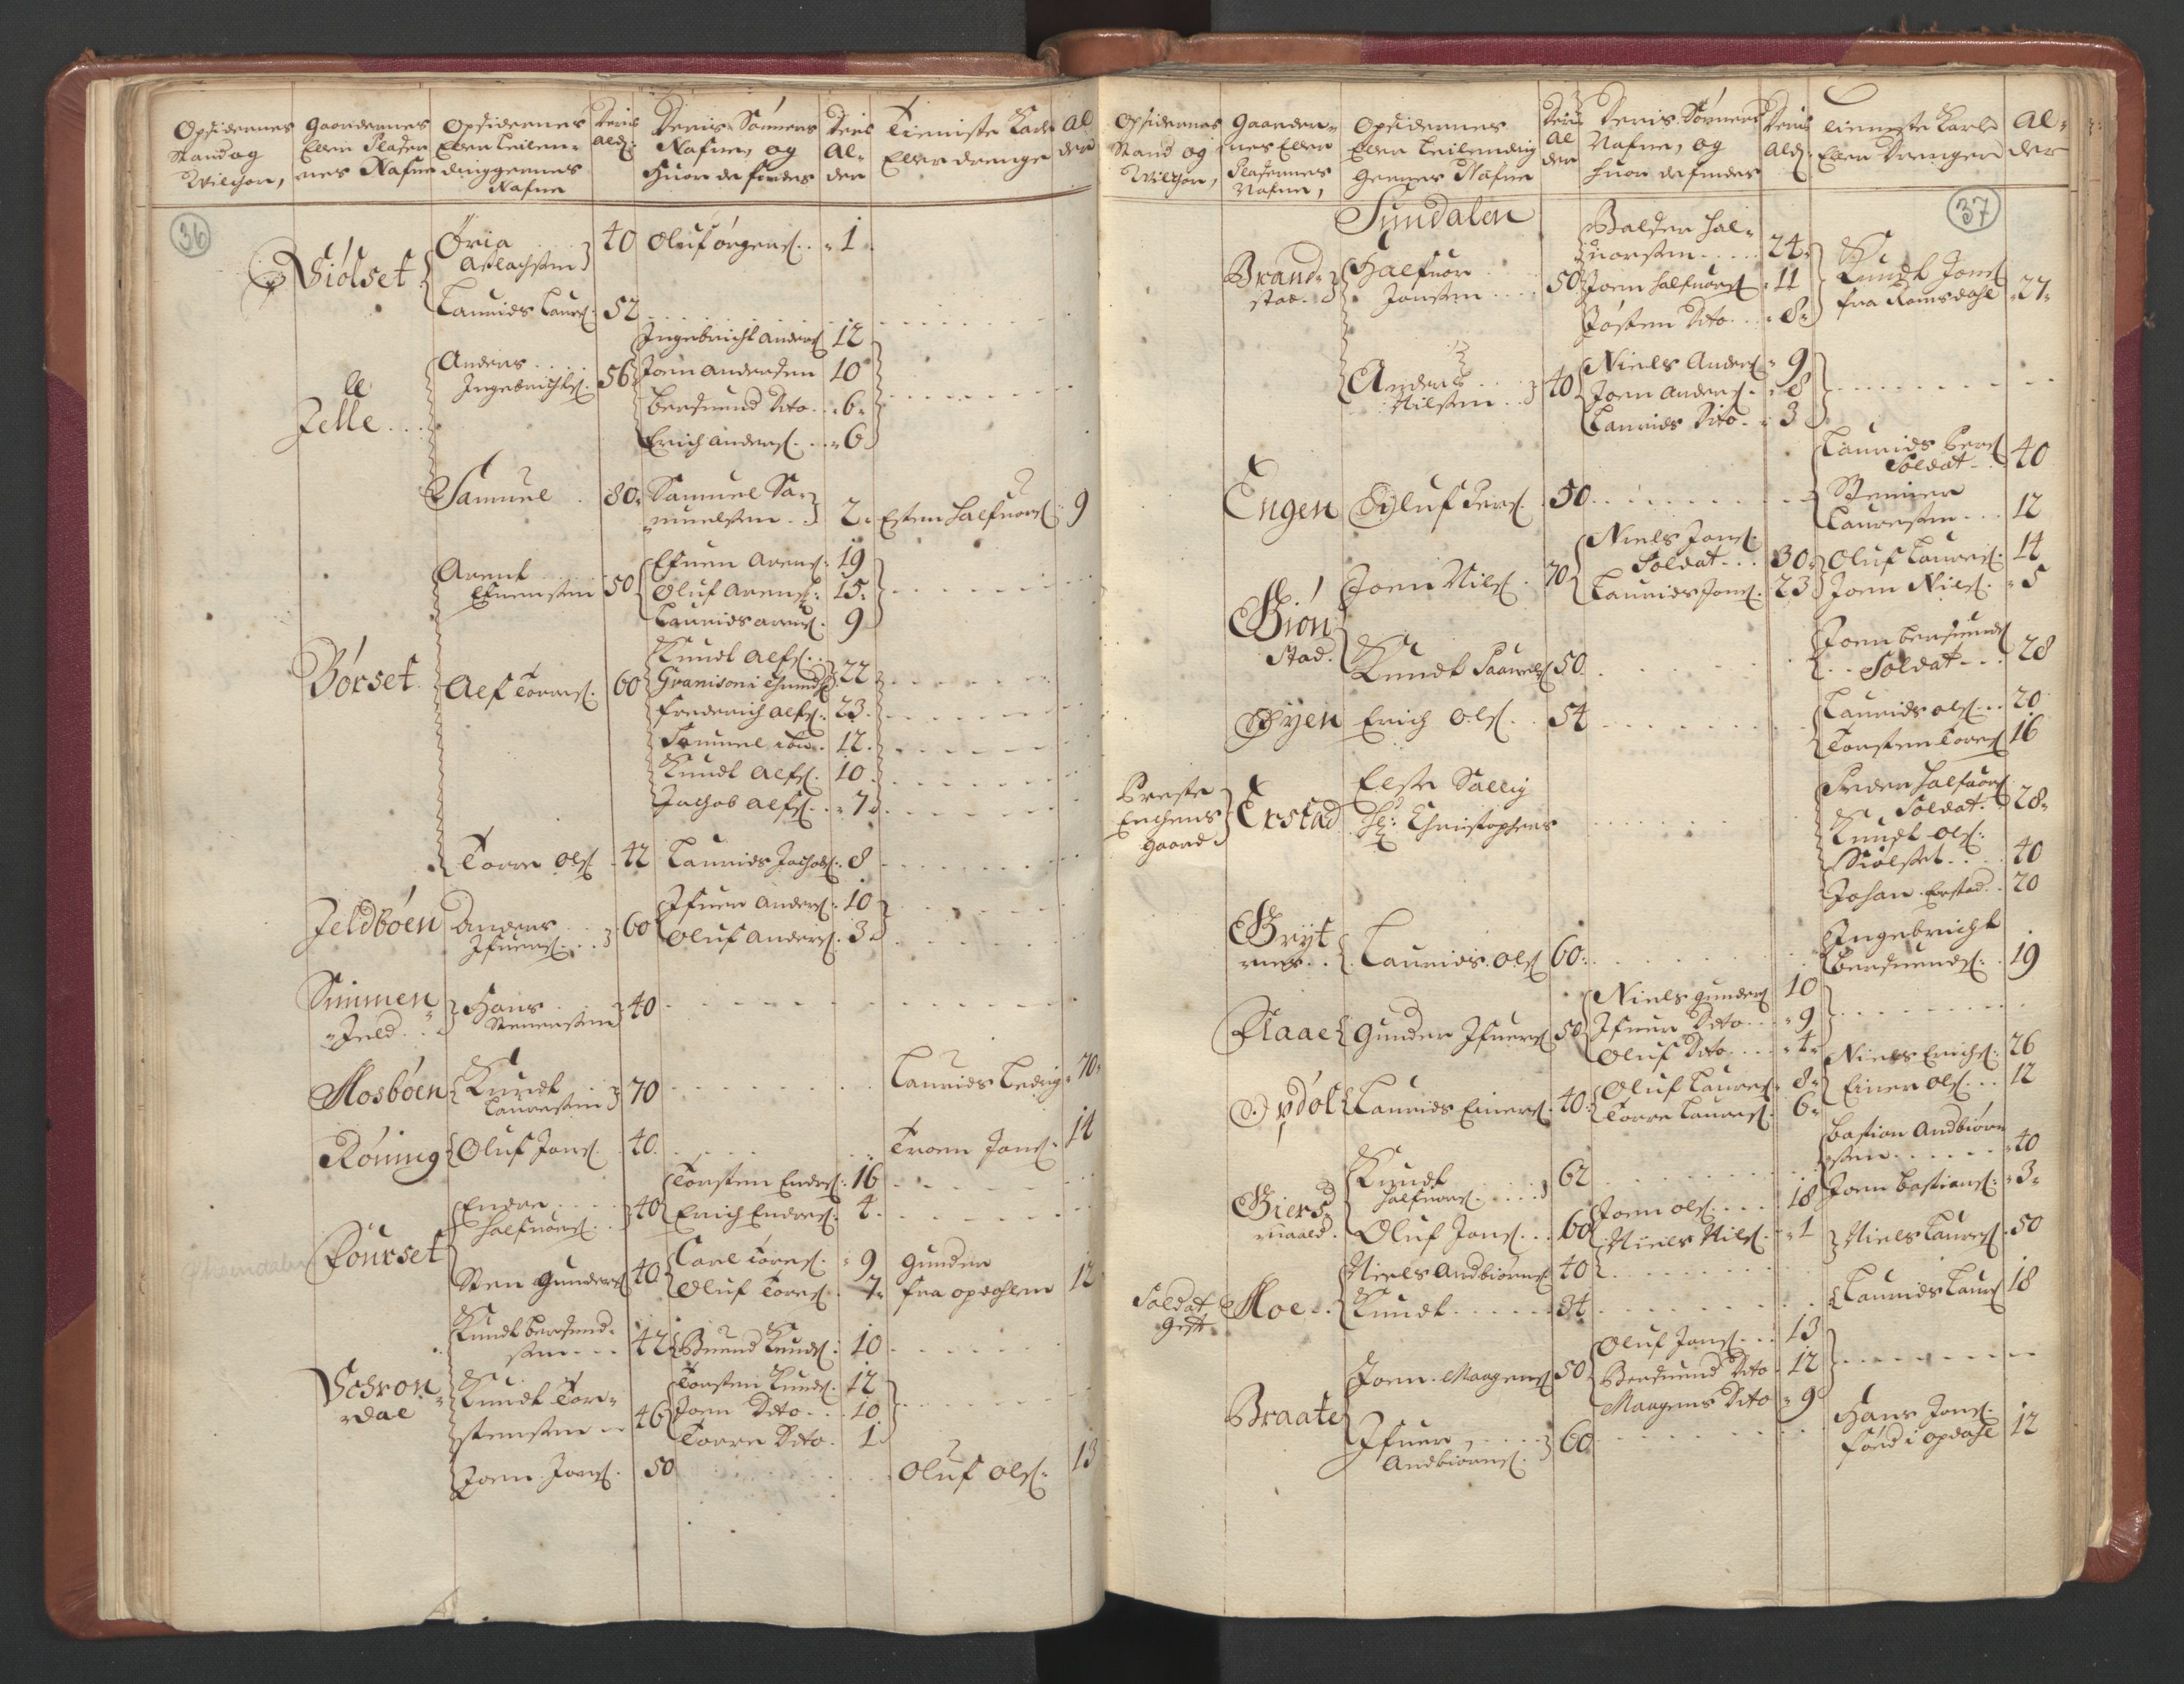 RA, Manntallet 1701, nr. 11: Nordmøre fogderi og Romsdal fogderi, 1701, s. 36-37